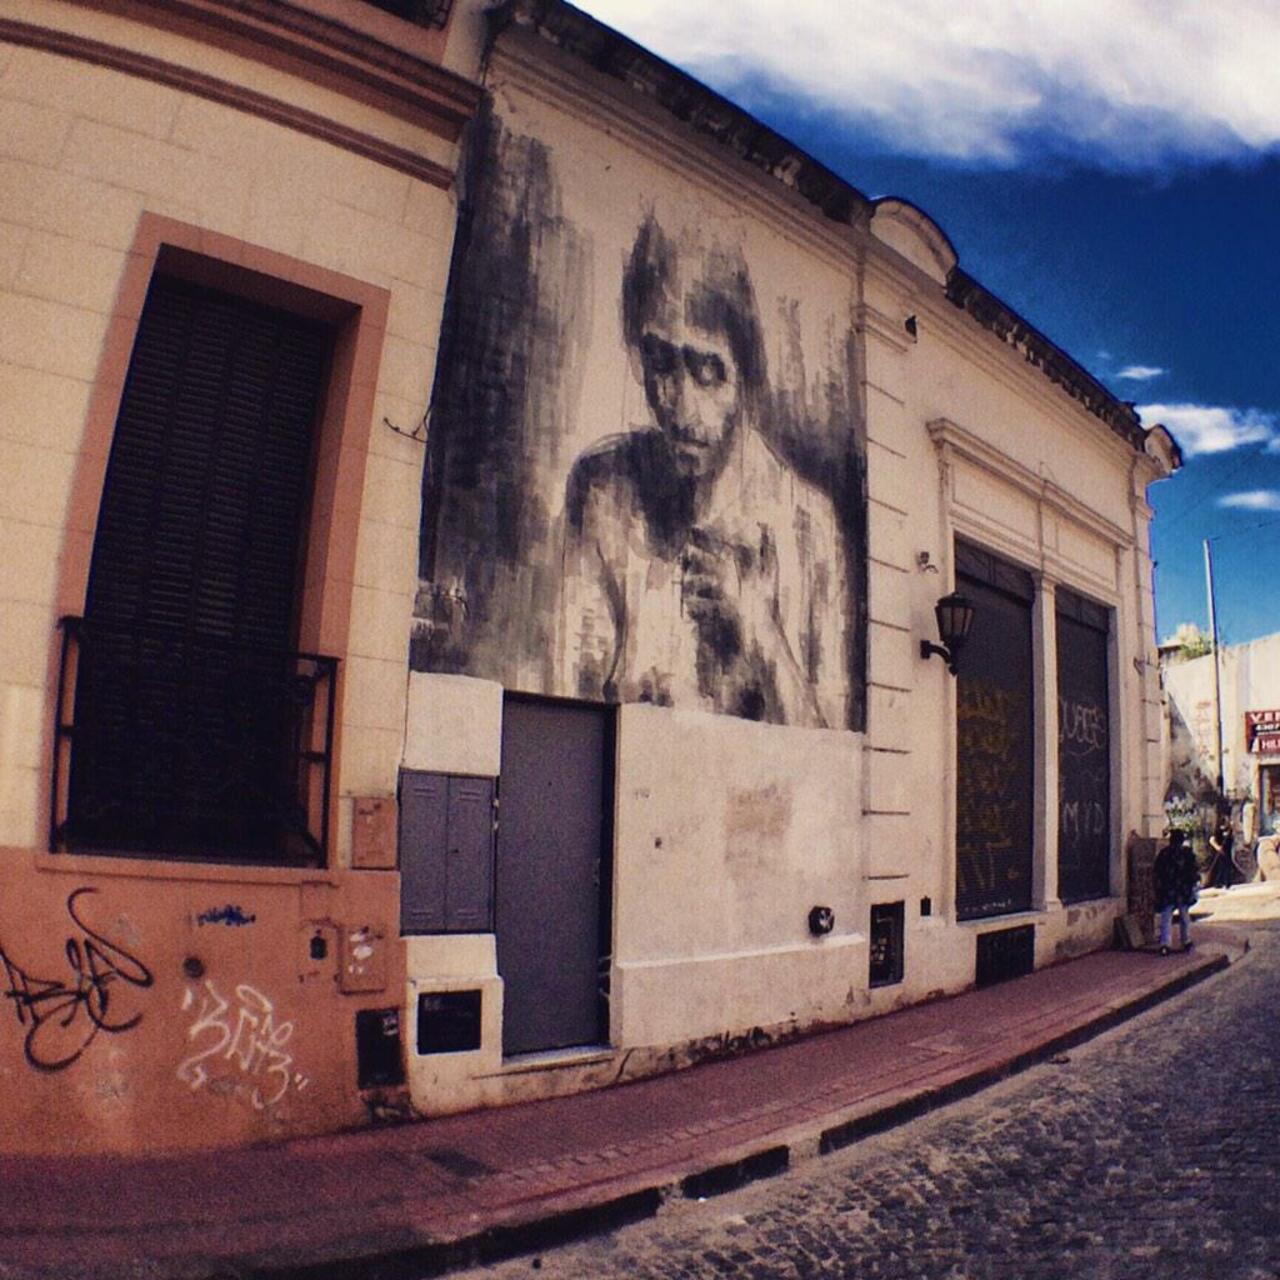 #mural #graffiti #BuenosAires #Argentina http://t.co/noO1crOCYk